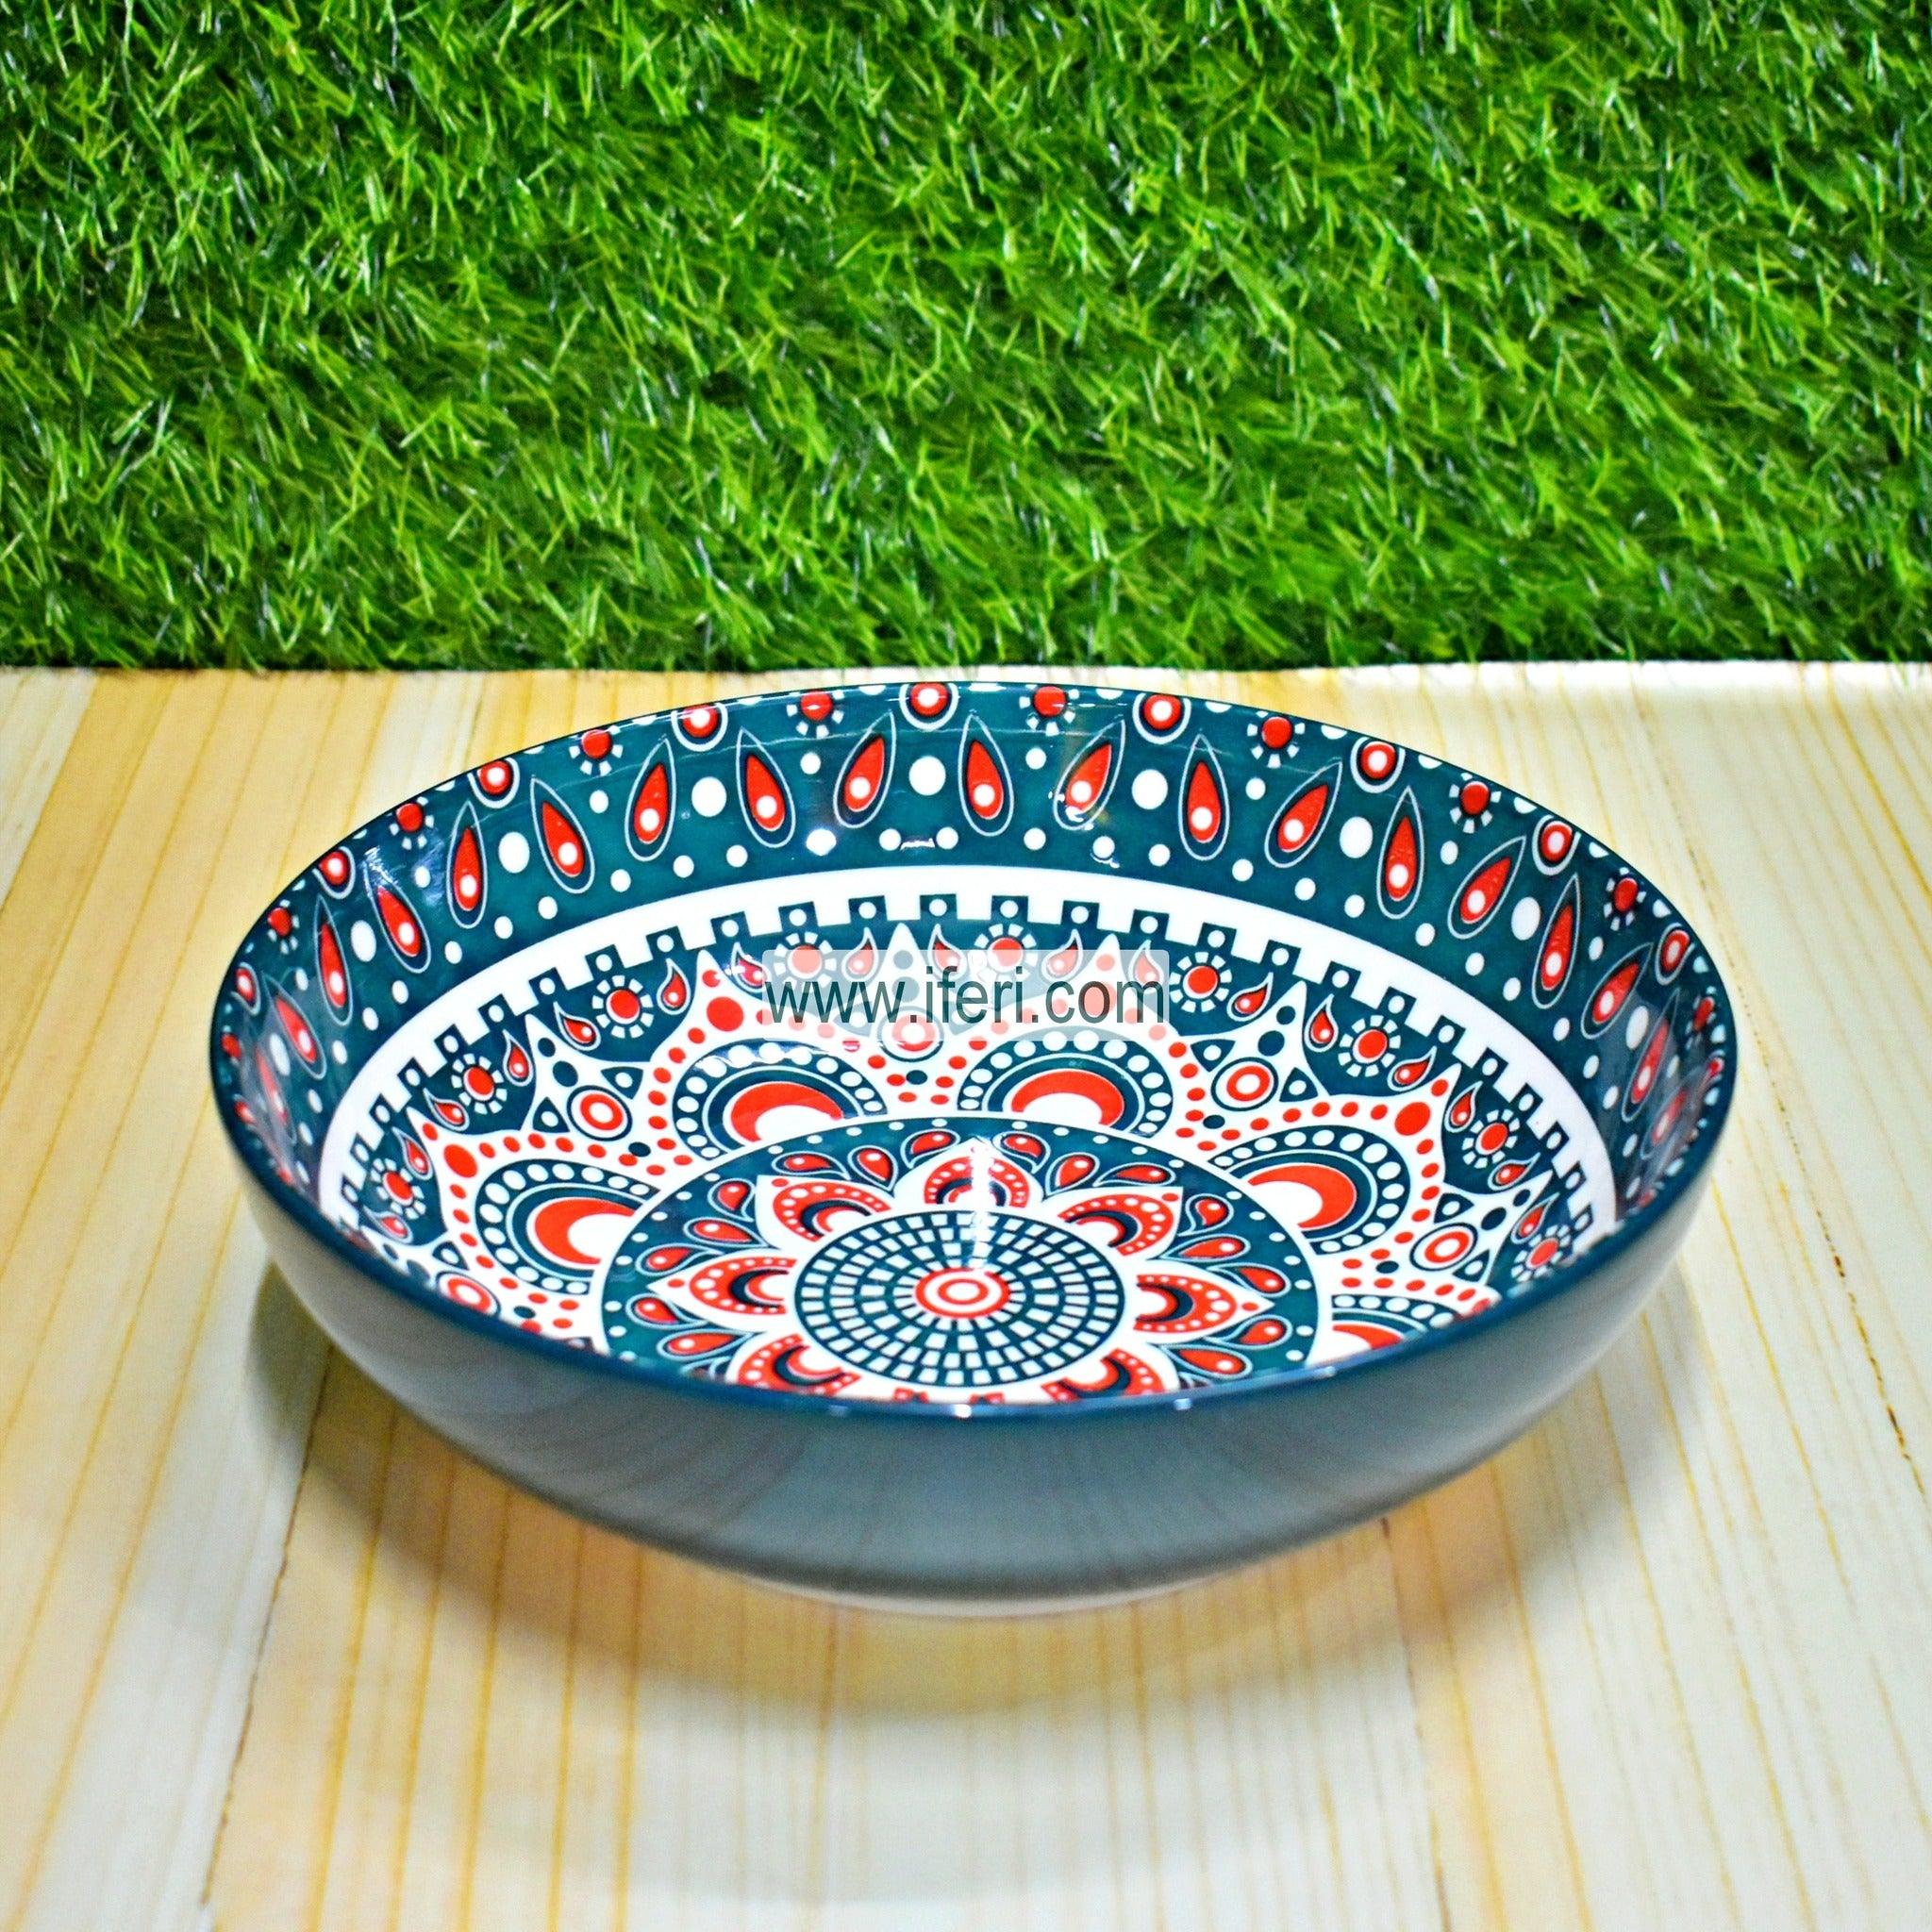 10 Inch Ceramic Curry Serving Dish SY0087 Price in Bangladesh - iferi.com